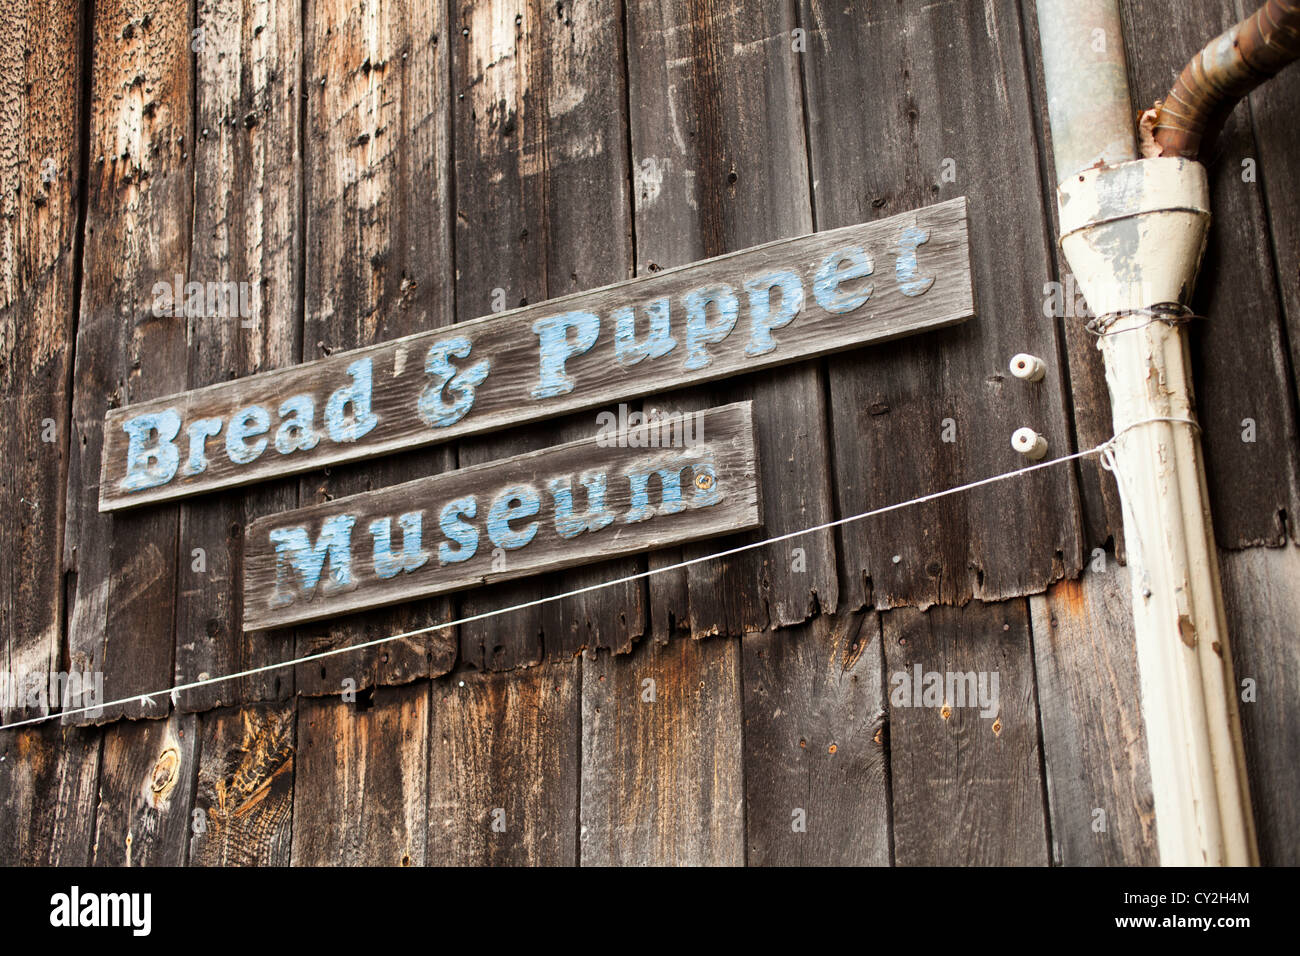 Bread and Puppet Theater, Barton, Vermont, USA Stockfoto